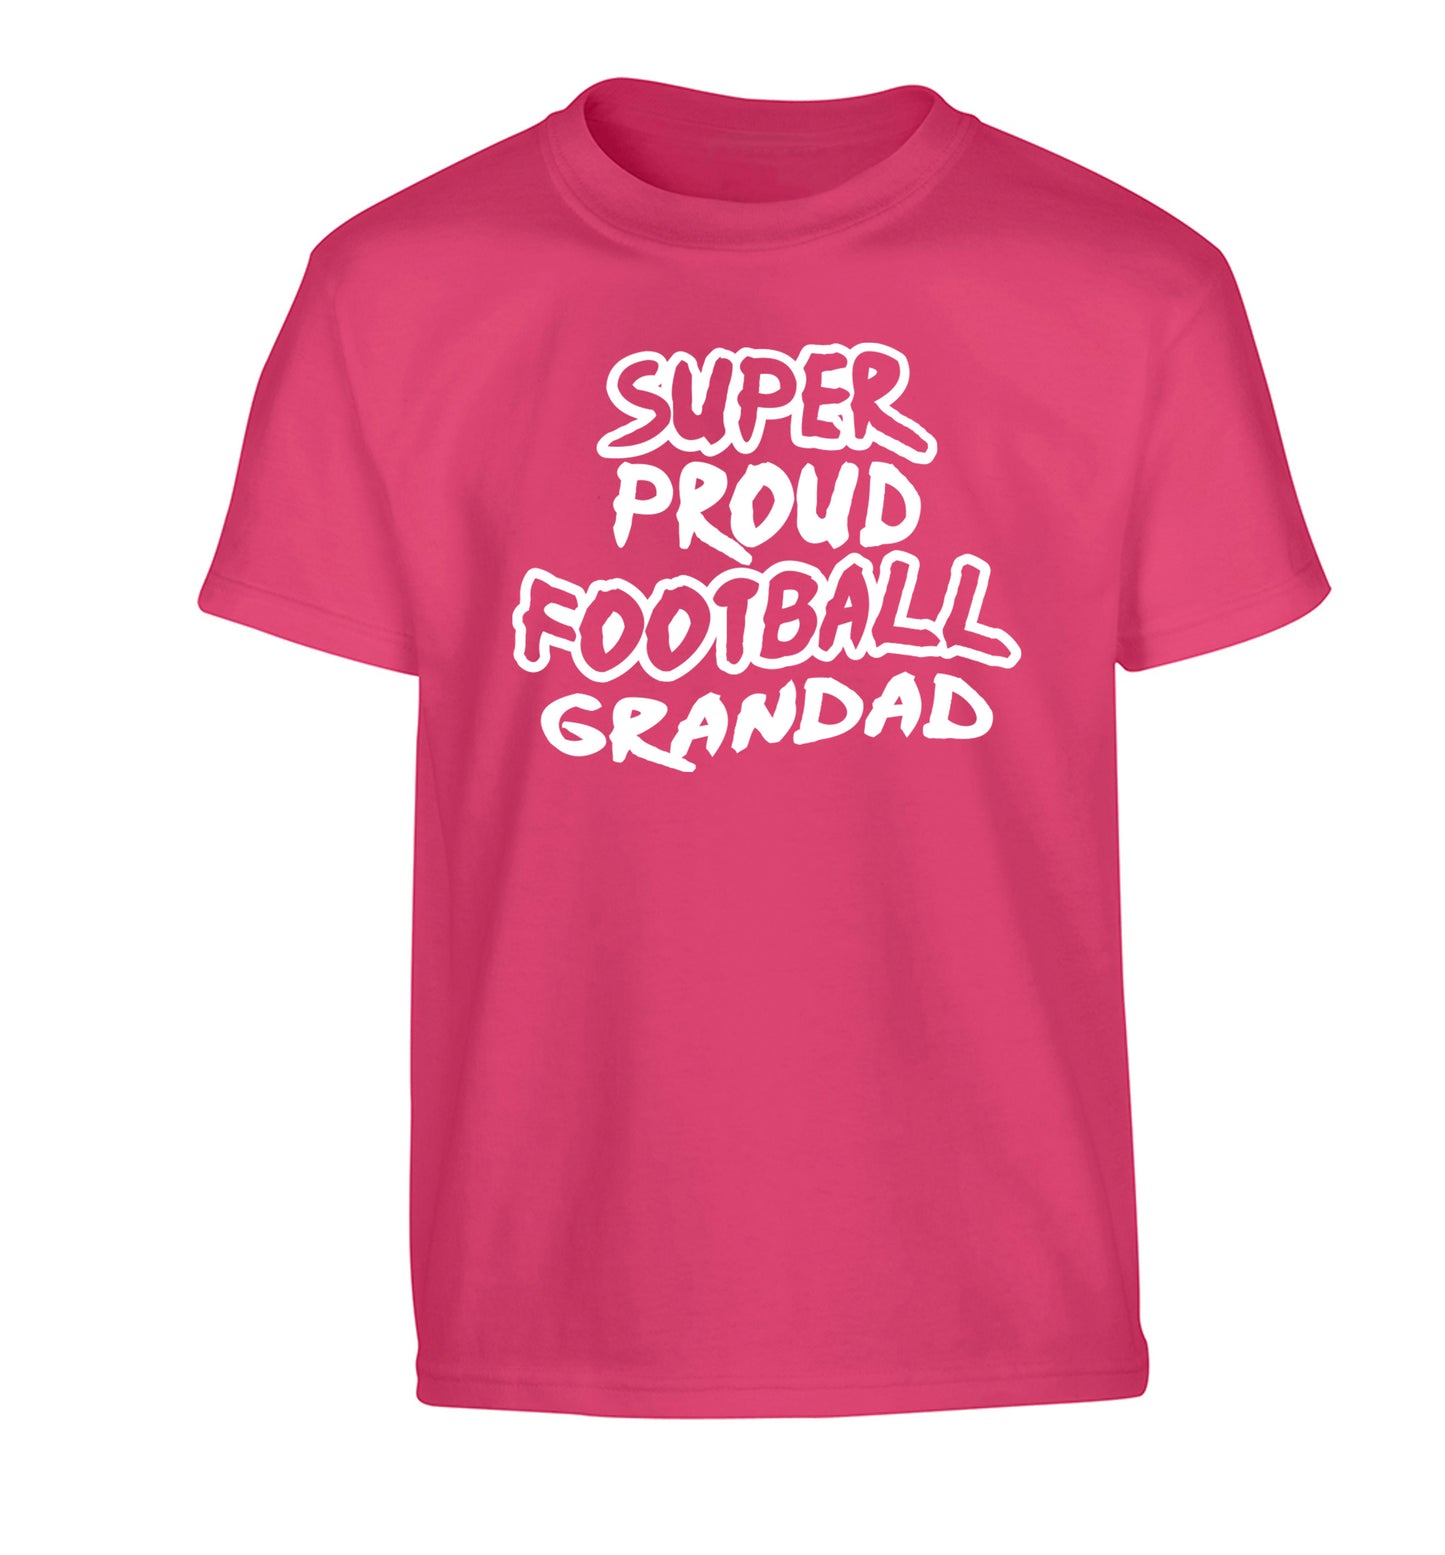 Super proud football grandad Children's pink Tshirt 12-14 Years